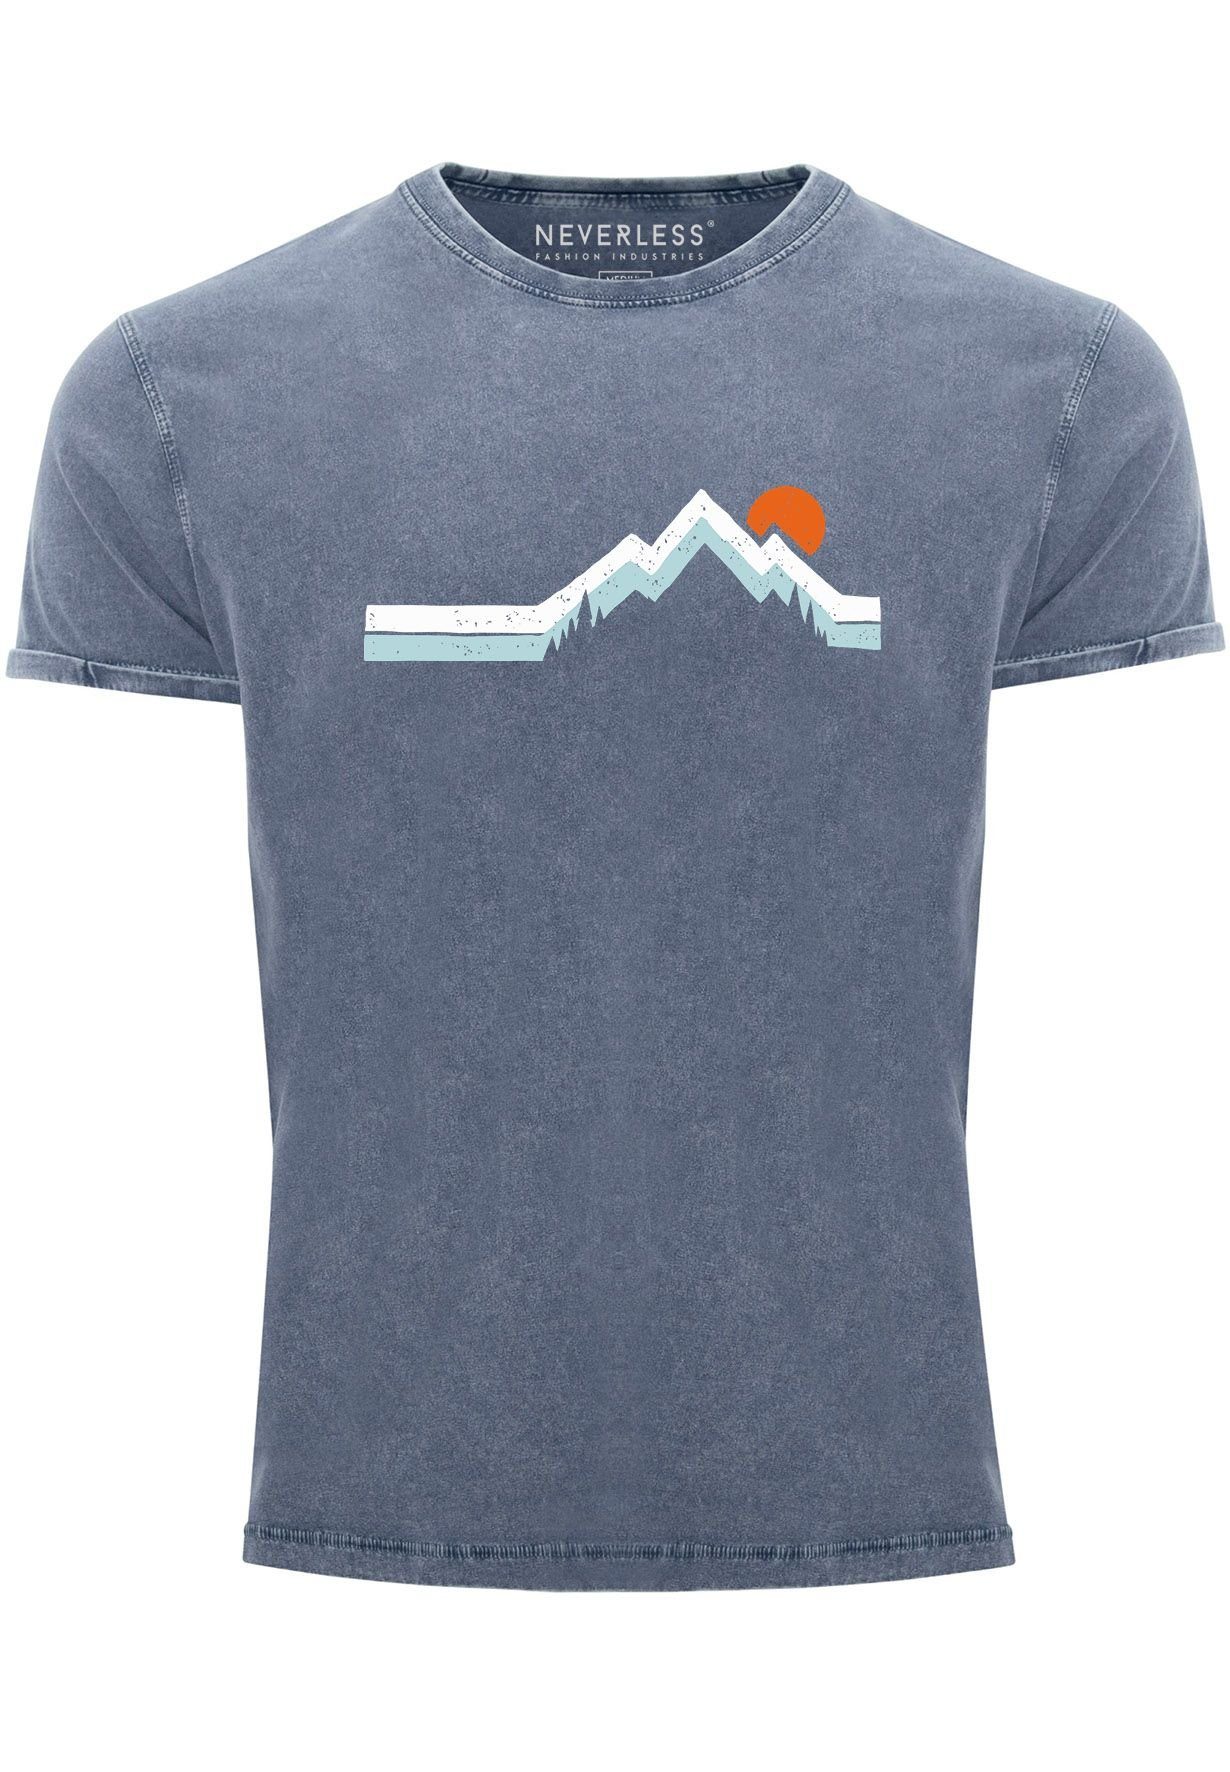 Natur Printshirt Vintage-Shirt Print-Shirt mit Wandern T-Shirt Print Neverless Berg Herren Auf Outdoor